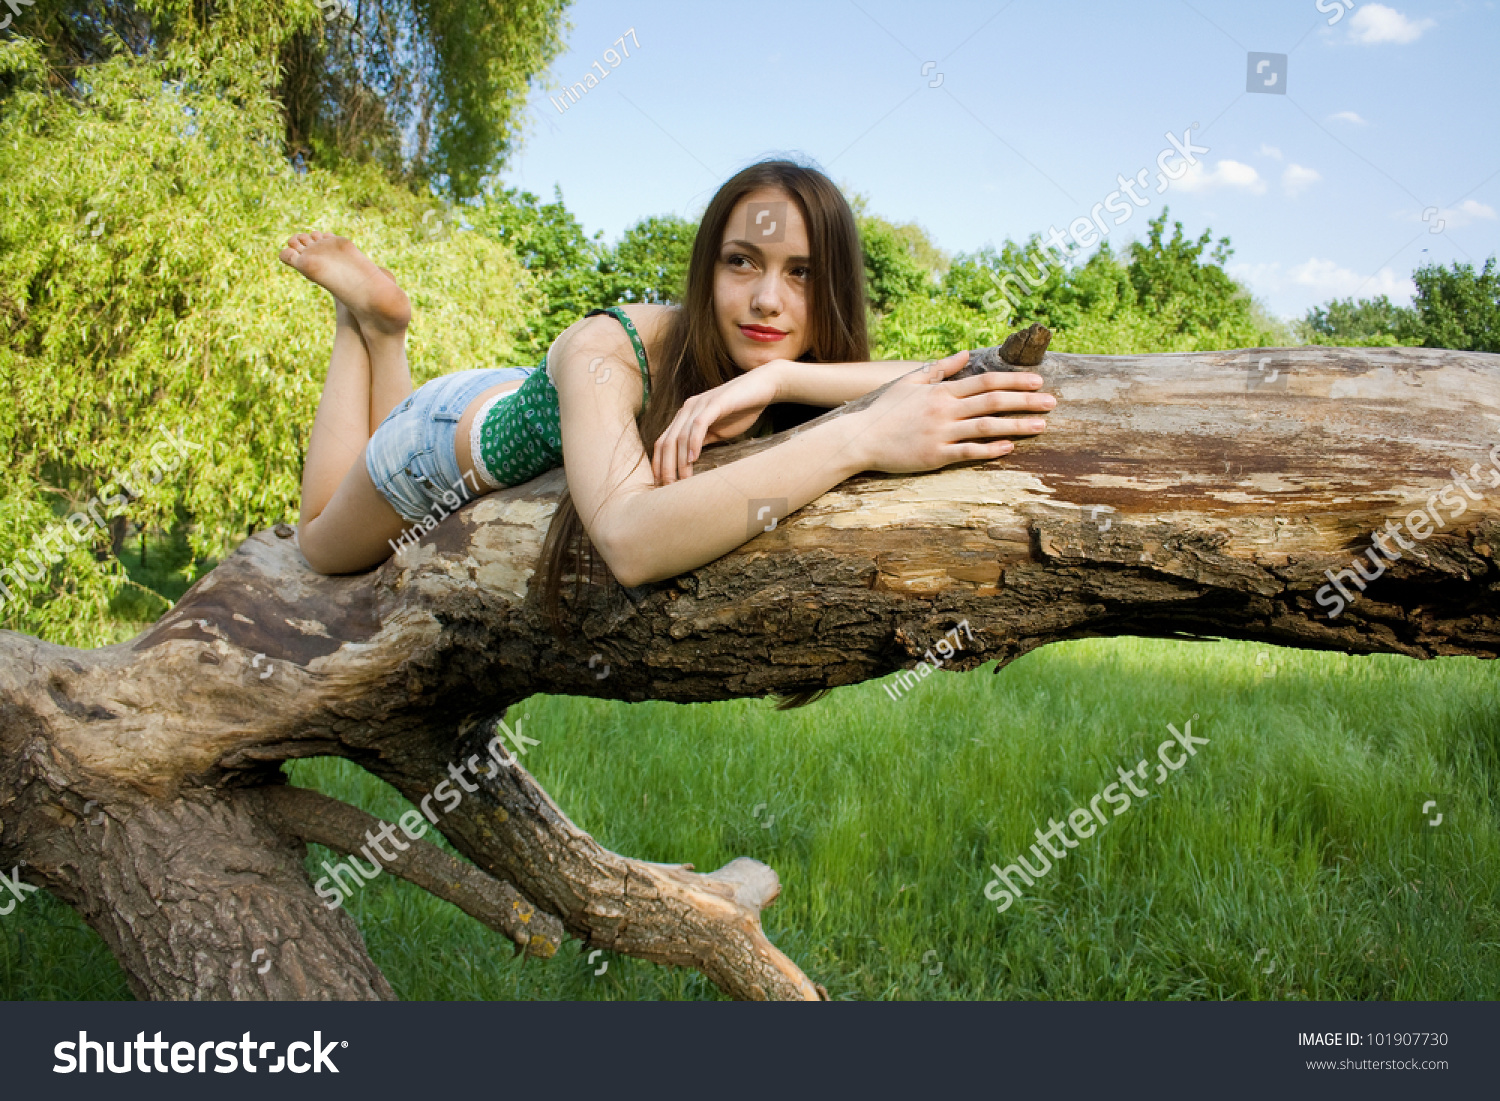 https://image.shutterstock.com/z/stock-photo-beautiful-girl-lying-on-a-tree-in-denim-shorts-and-a-t-shirt-loo-101907730.jpg